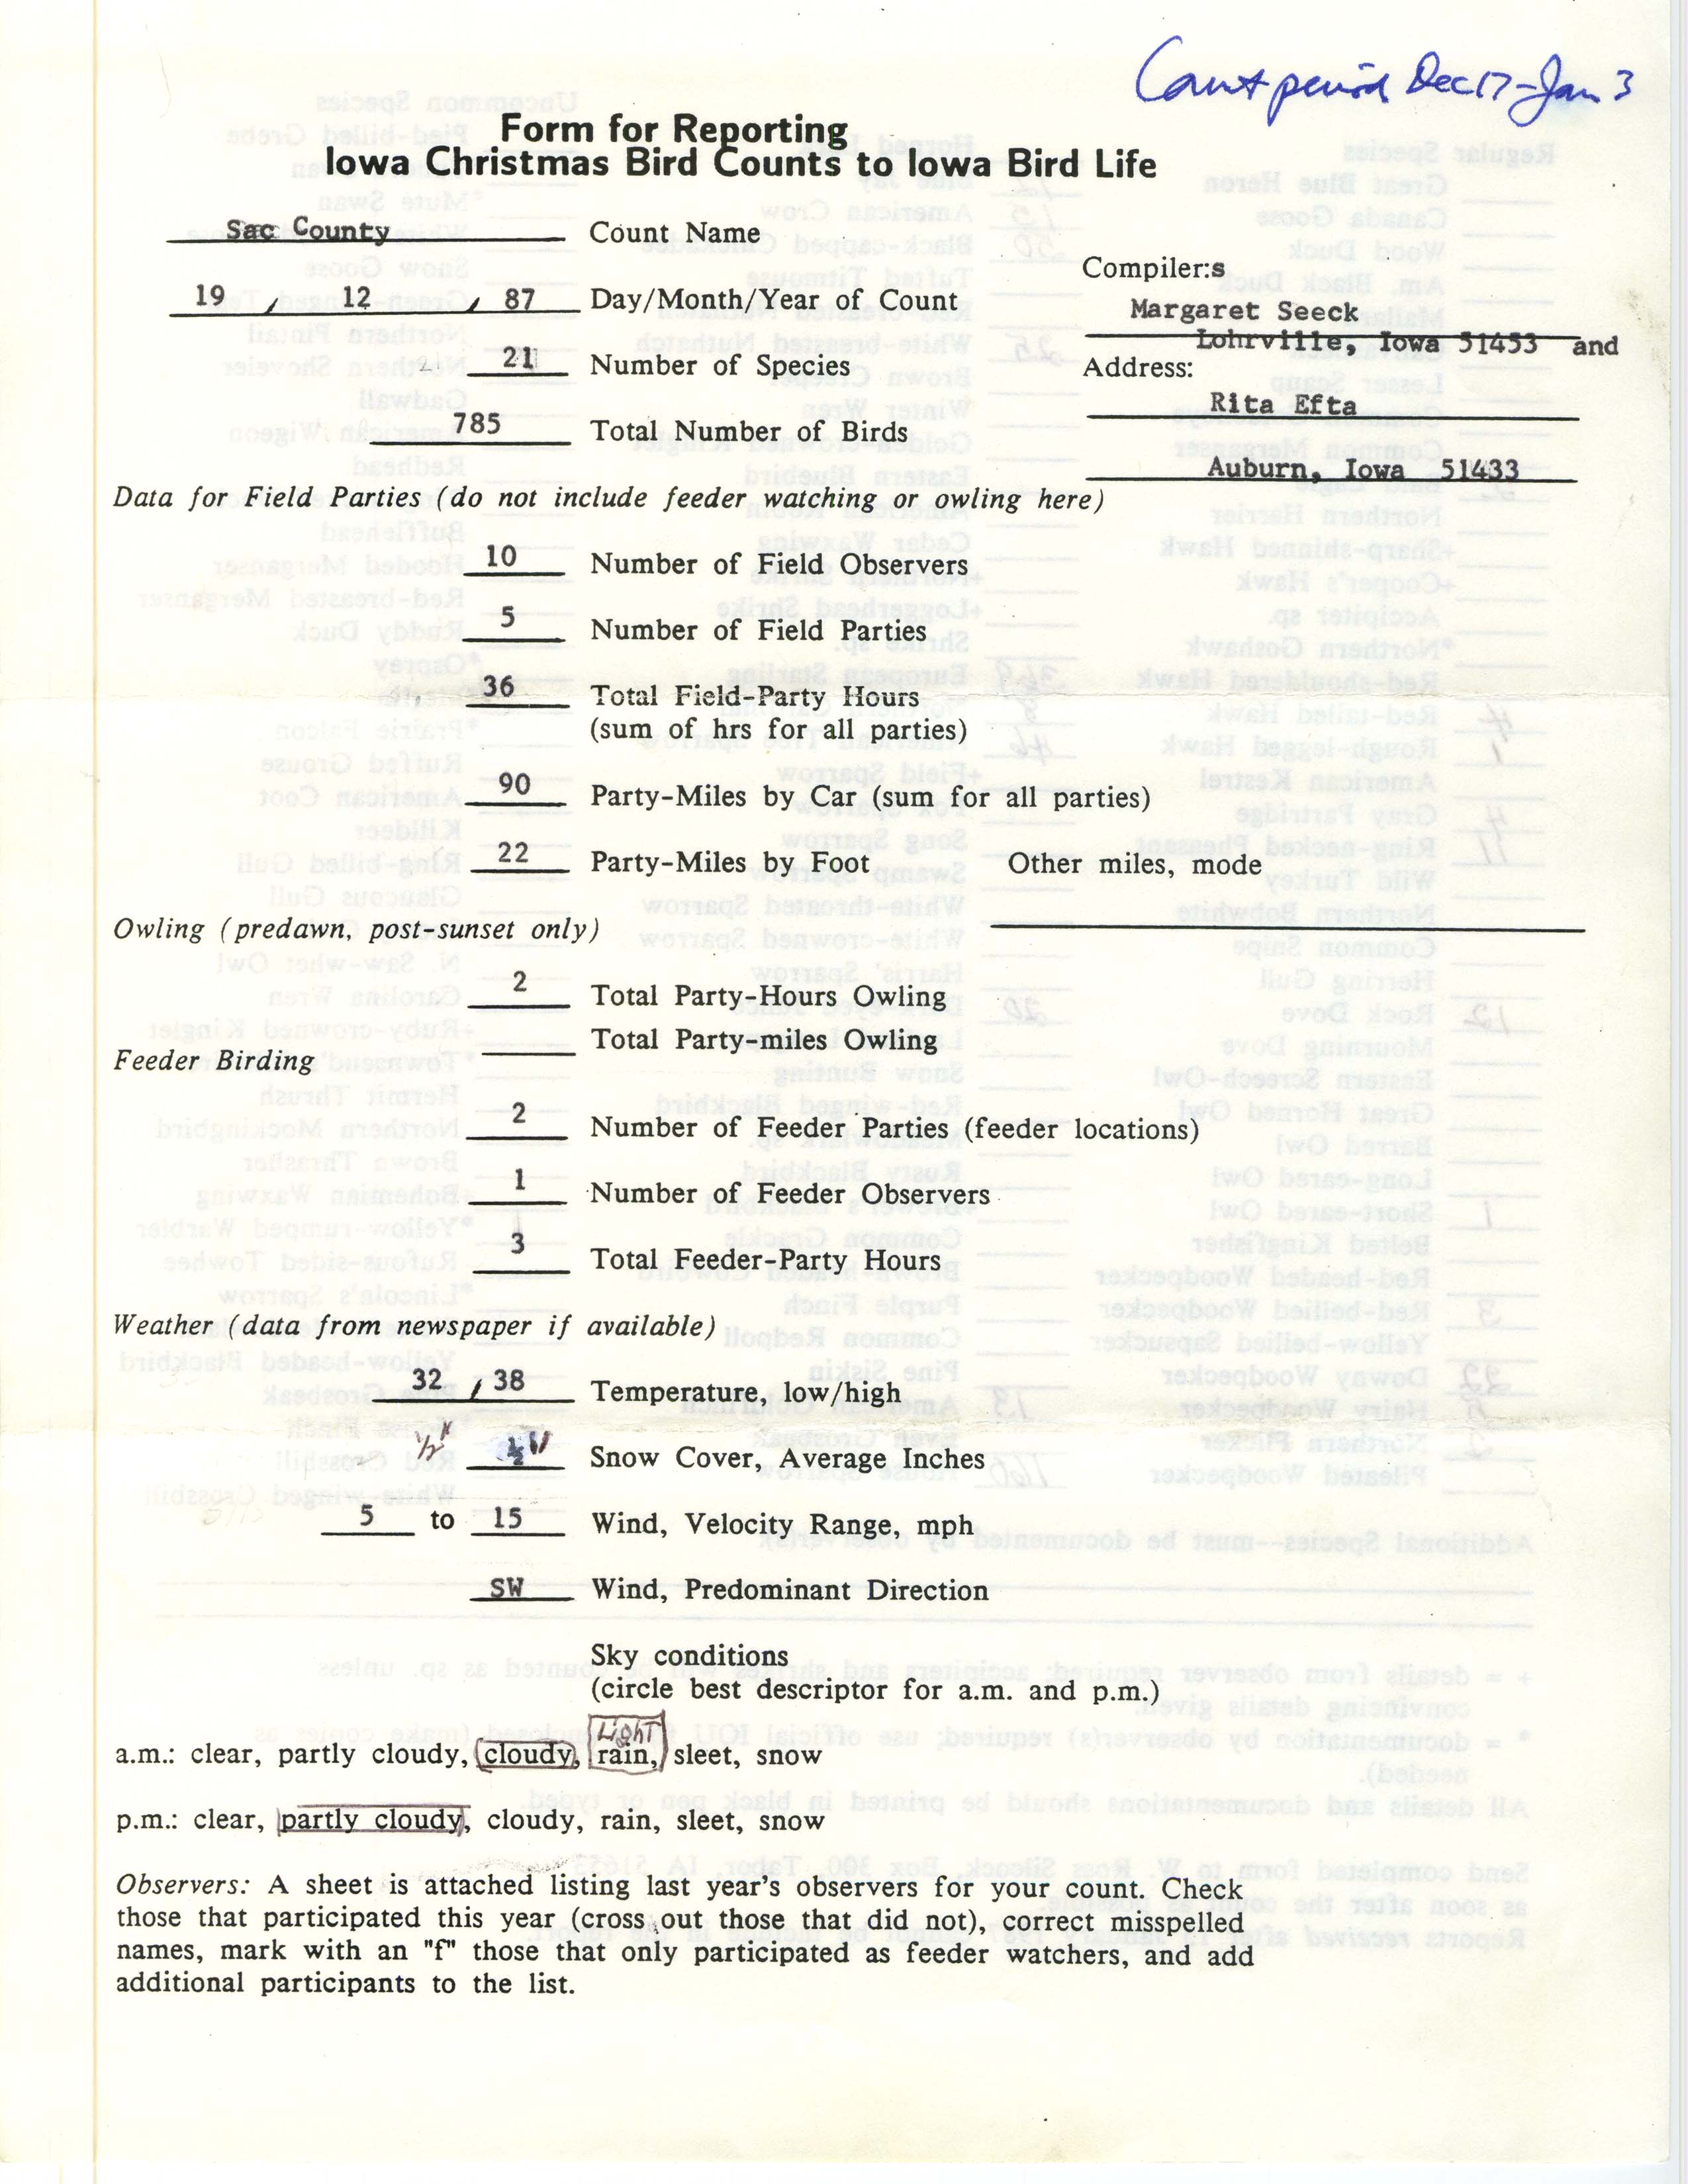 Form for reporting Iowa Christmas bird counts to Iowa Bird Life, Margaret Seeck and Rita E. Efta, December 19, 1987